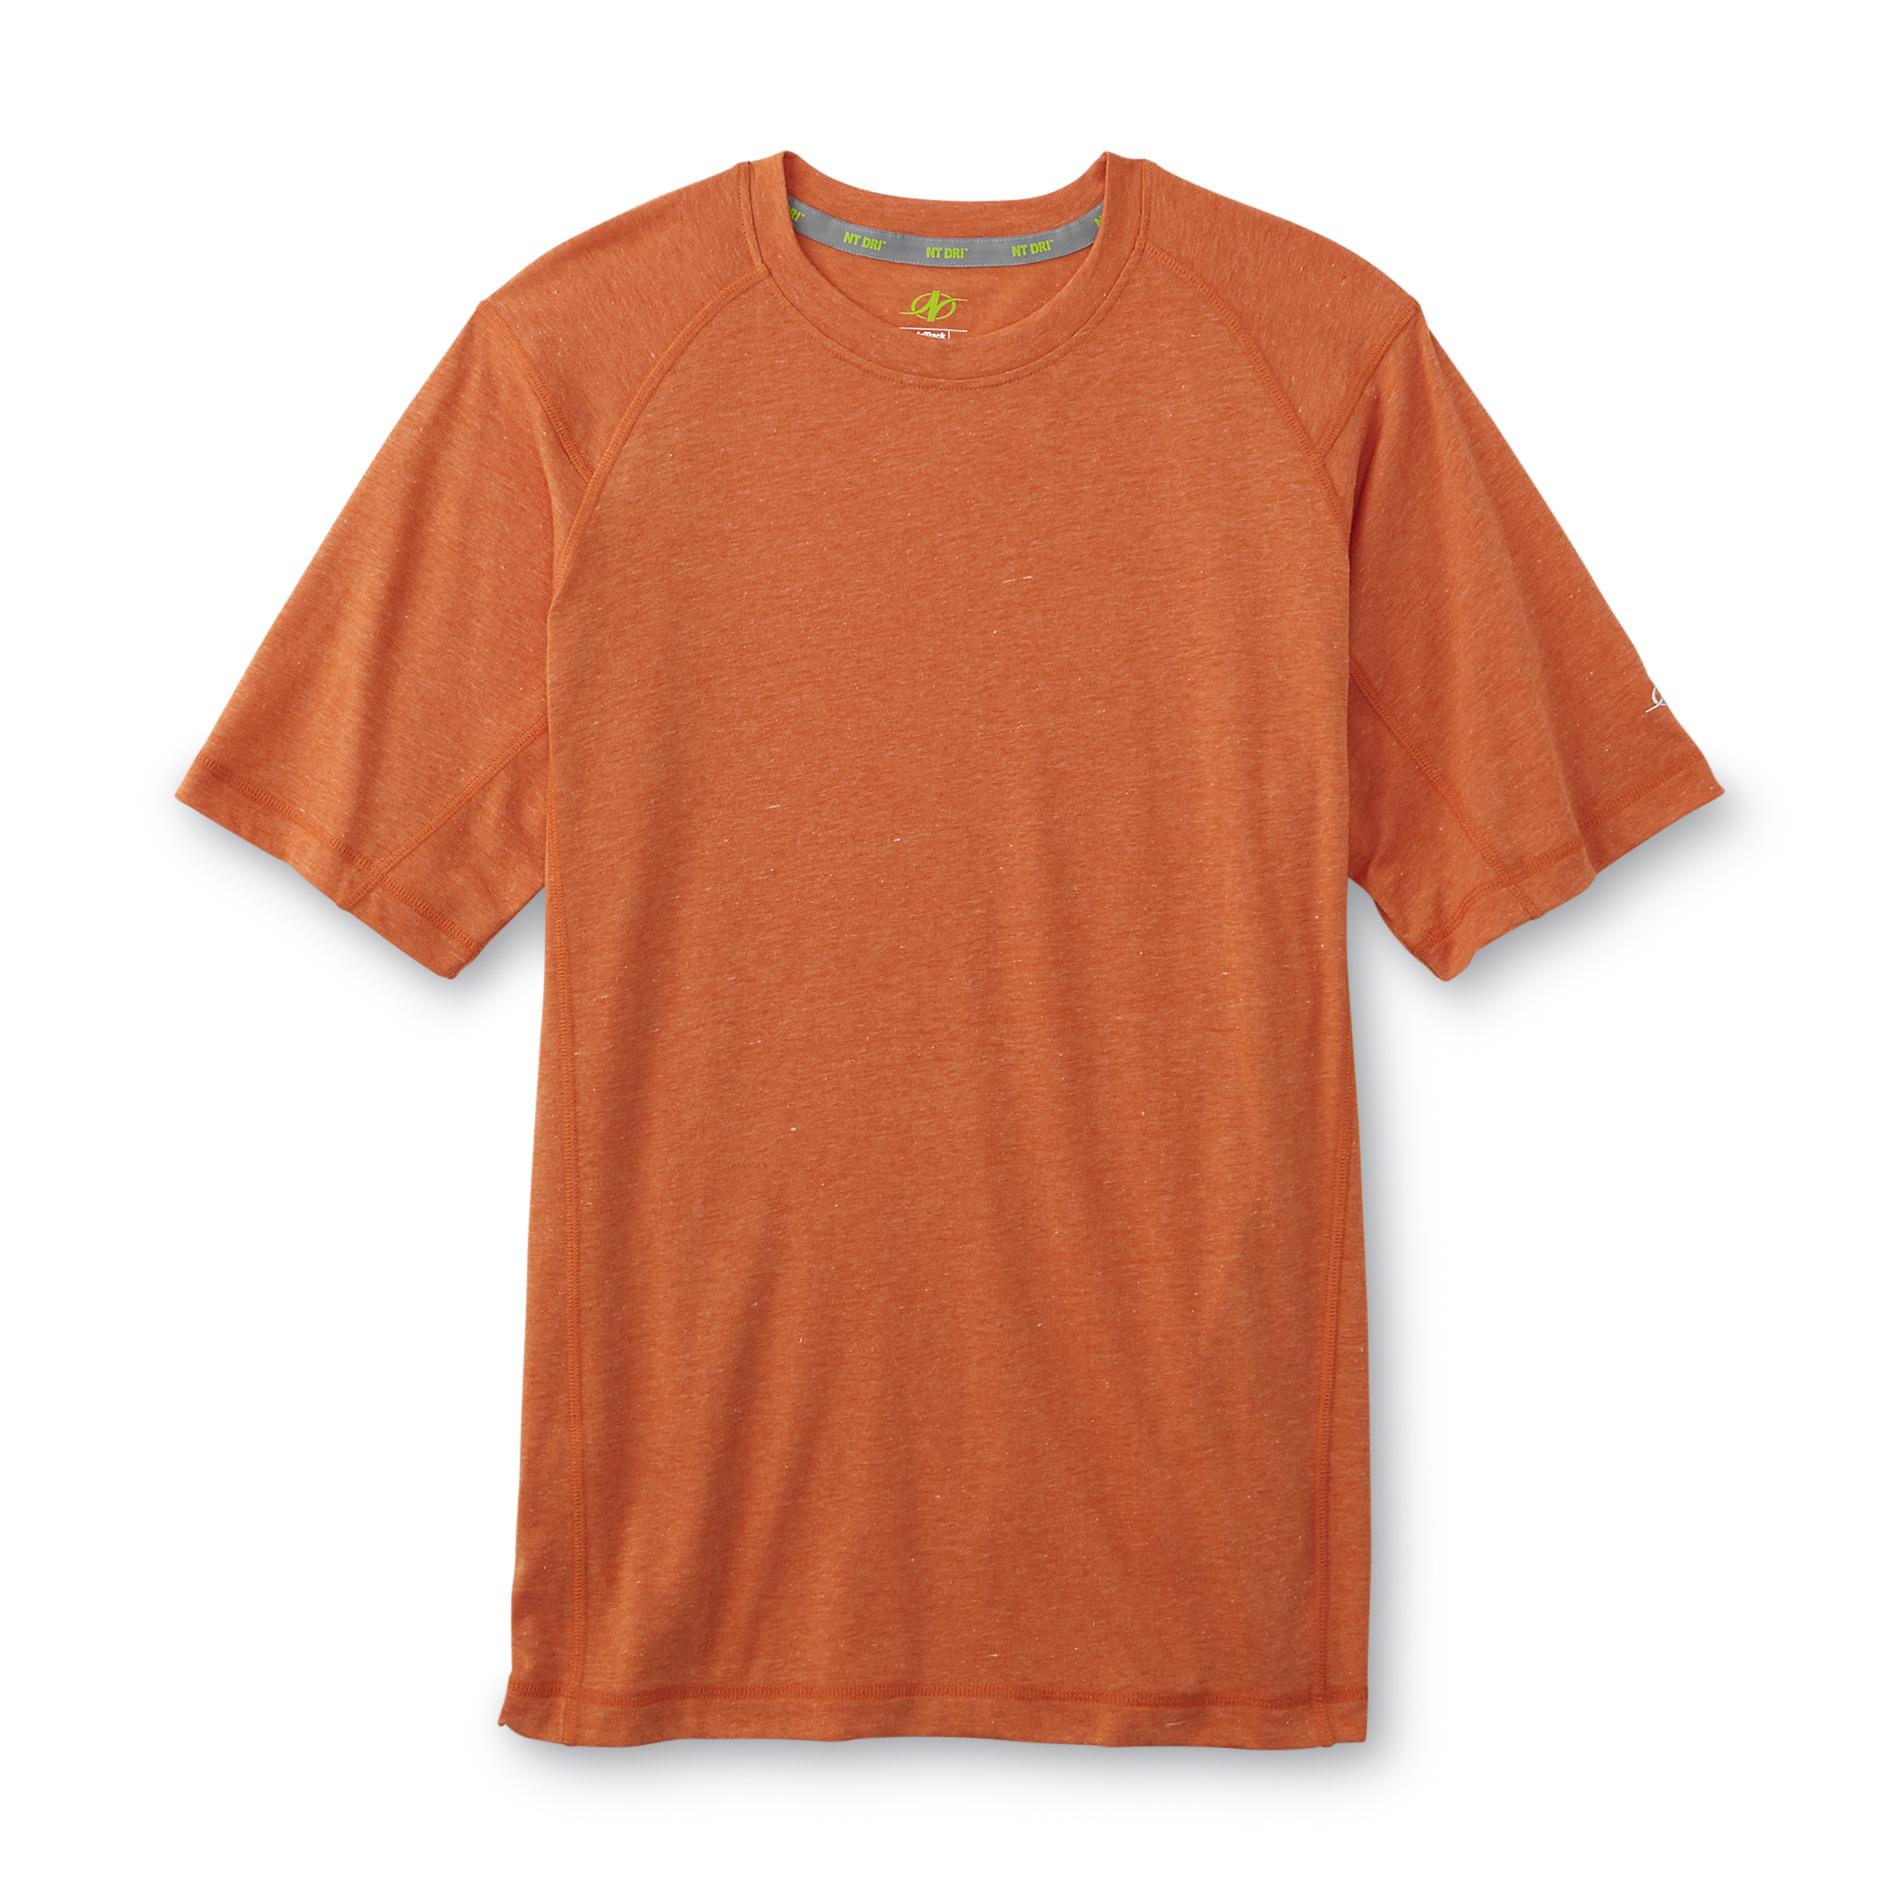 NordicTrack Men's Athletic T-Shirt - Colorblock